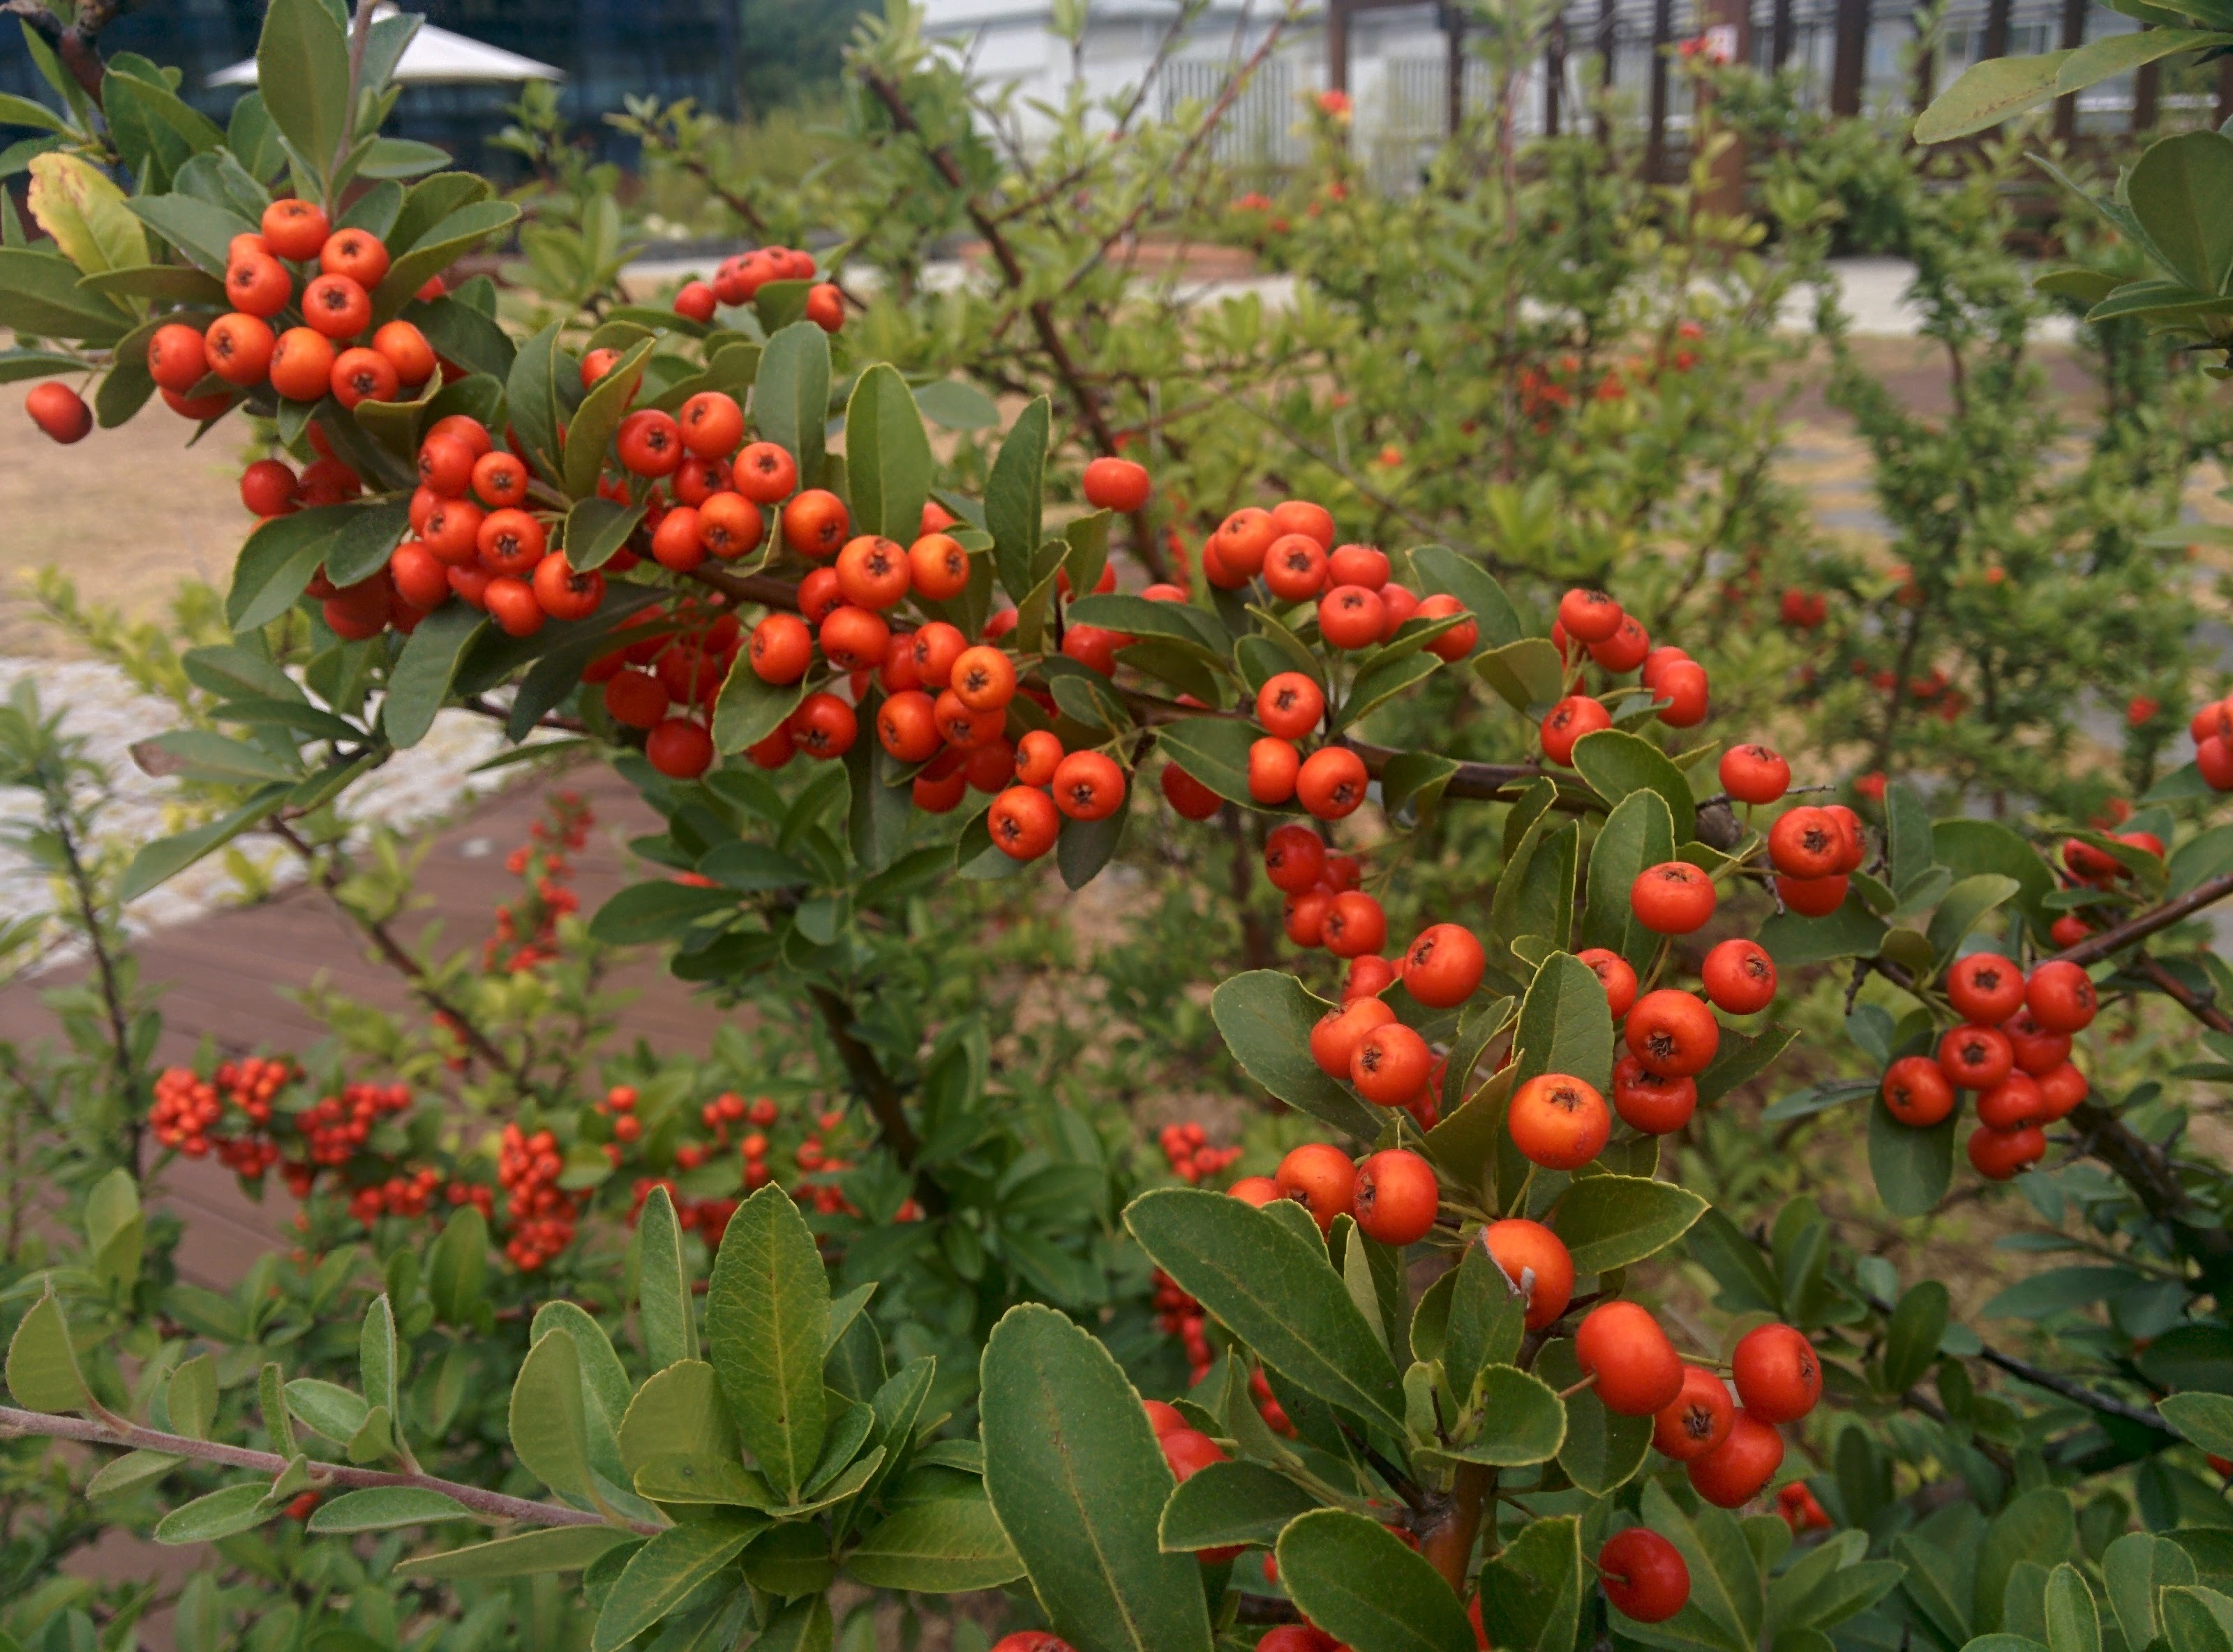 IMG_20150925_124857.jpg 마가목과 비슷하게 생긴 붉은색 열매를 맺는 피라칸다(피라칸사스)